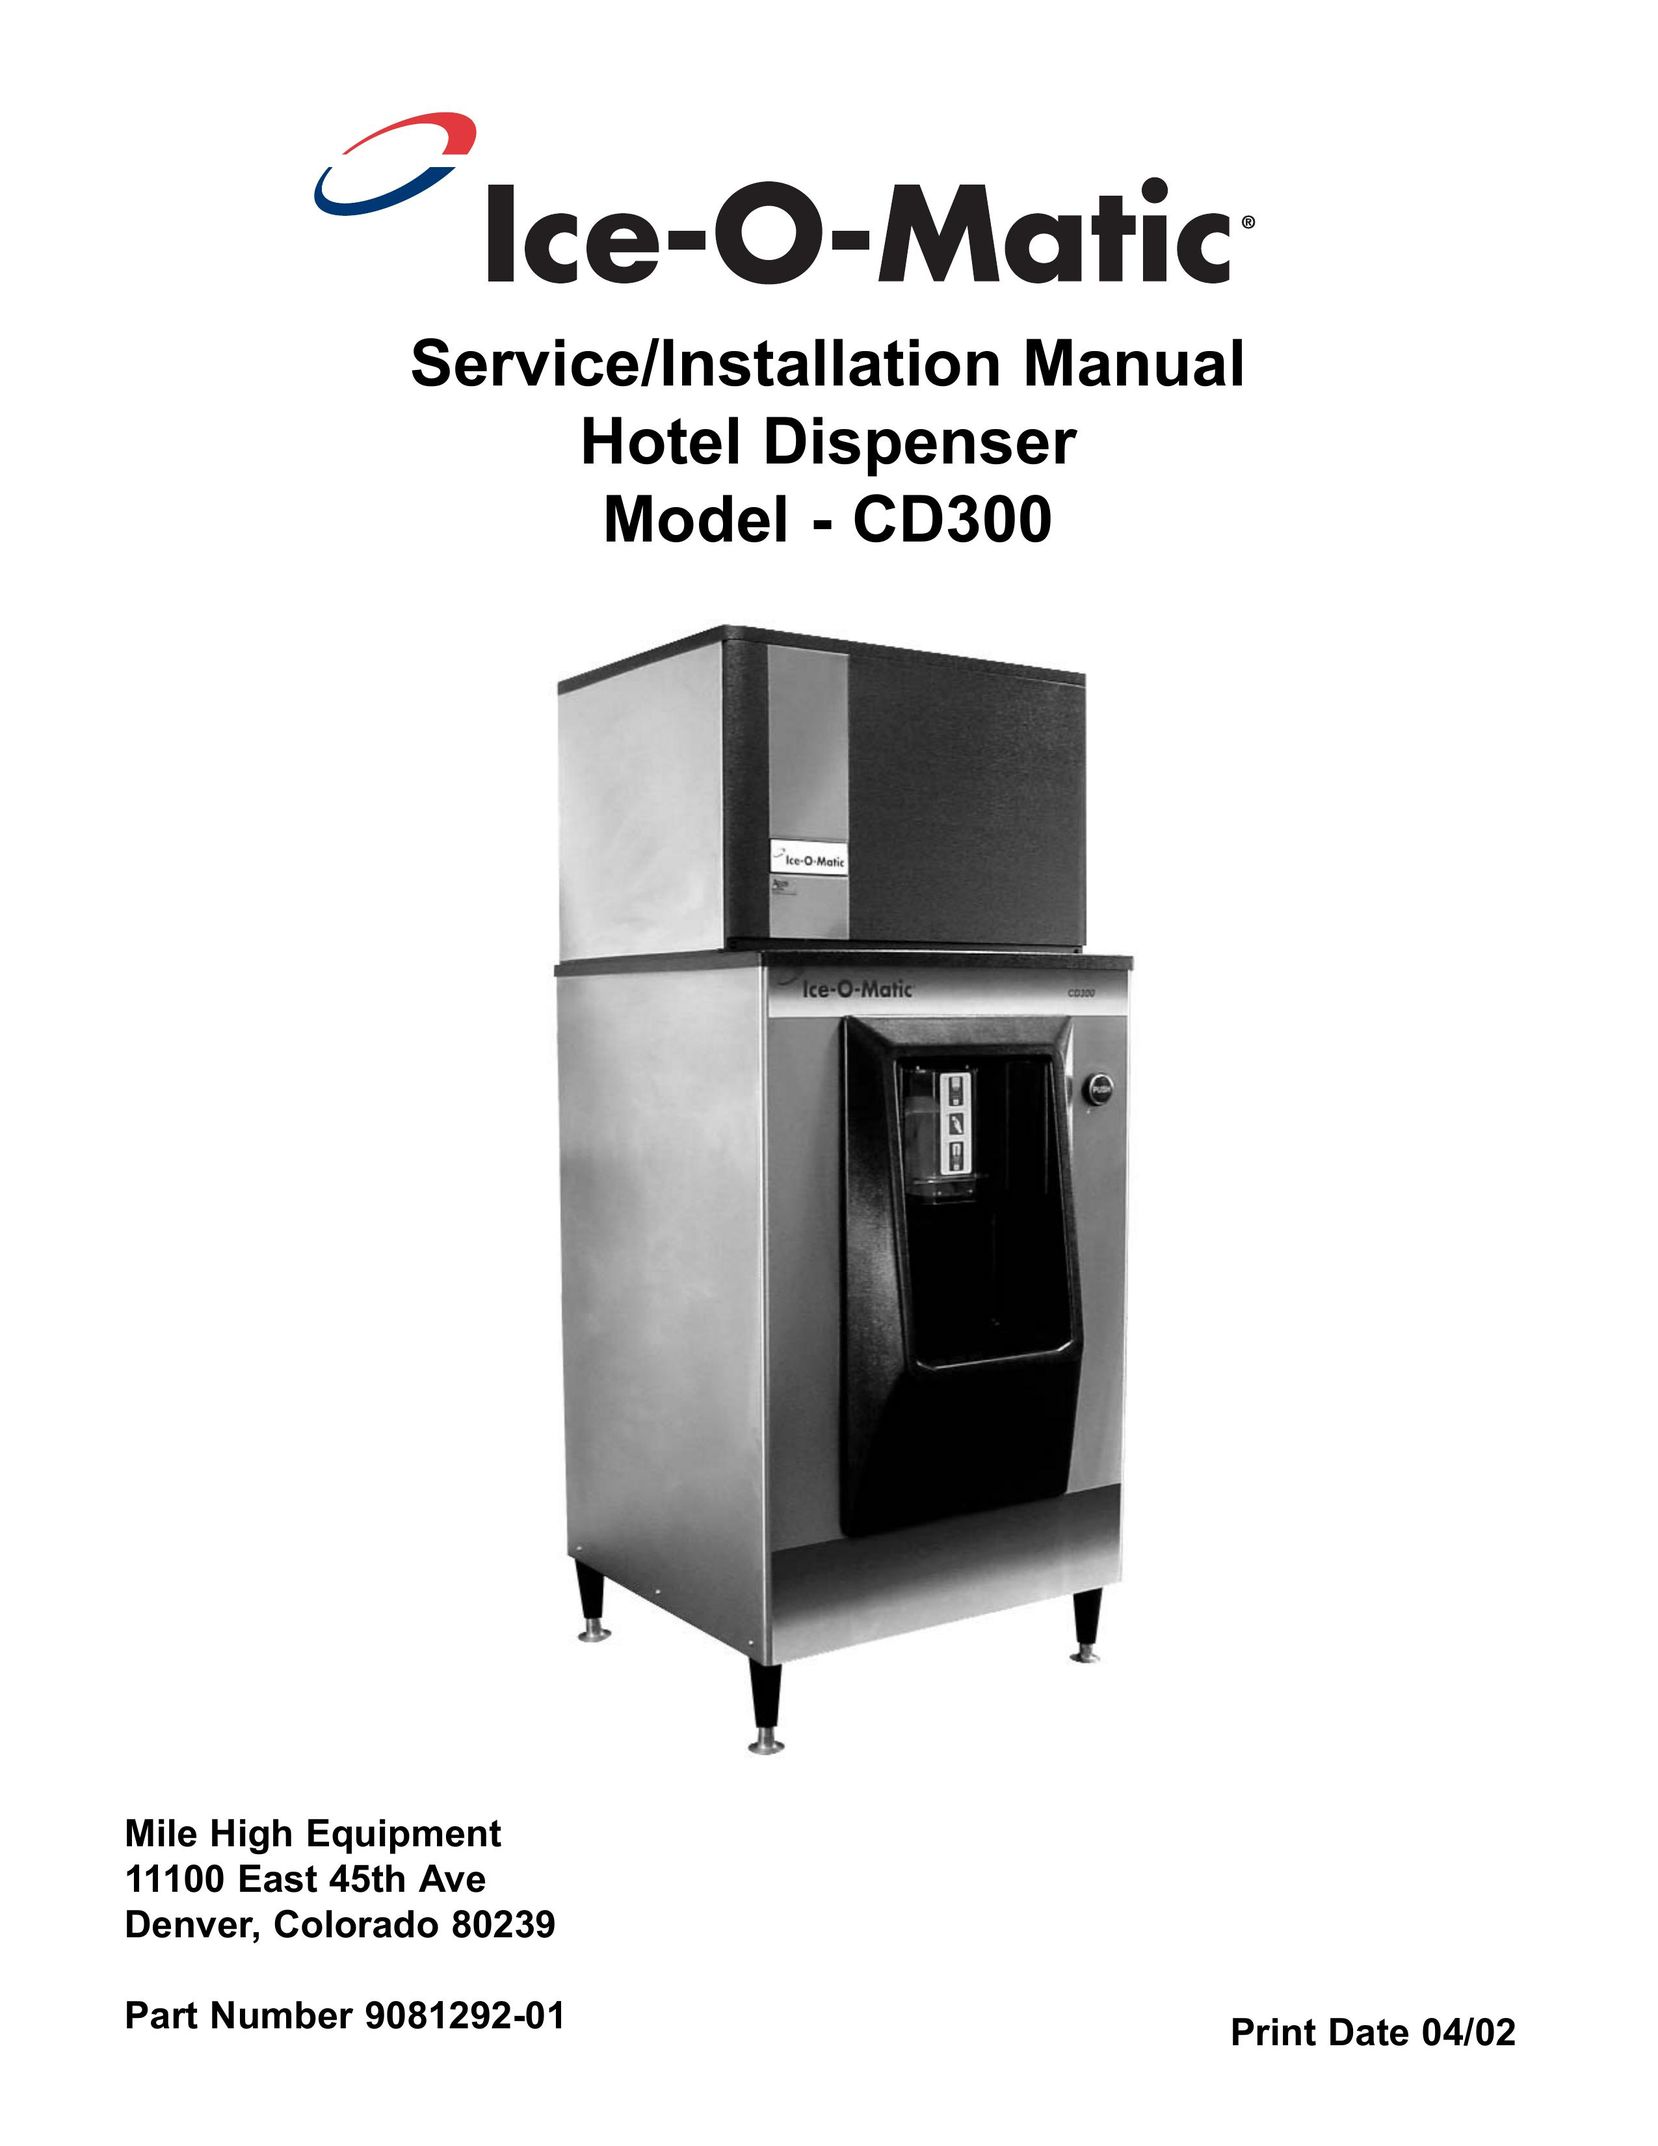 Ice-O-Matic CD300 Beverage Dispenser User Manual